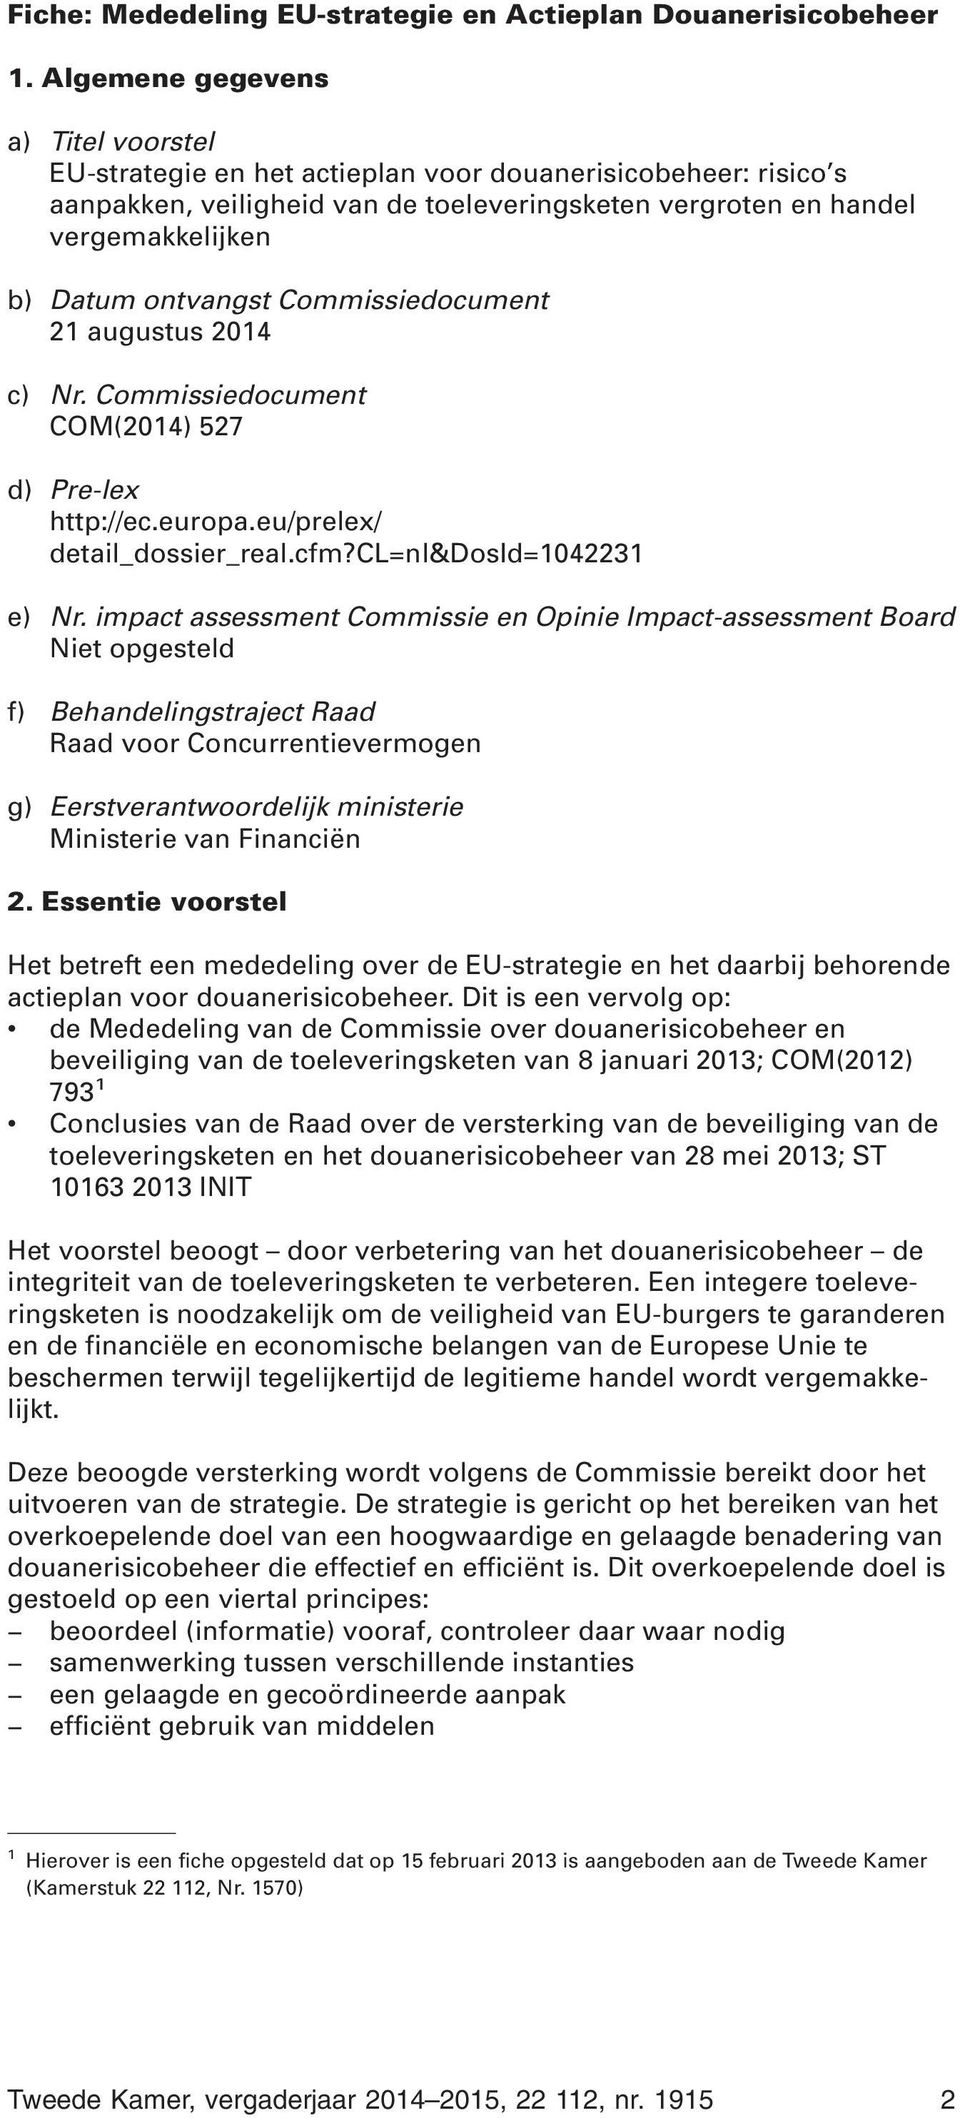 ontvangst Commissiedocument 21 augustus 2014 c) Nr. Commissiedocument COM(2014) 527 d) Pre-lex http://ec.europa.eu/prelex/ detail_dossier_real.cfm?cl=nl&dosid=1042231 e) Nr.